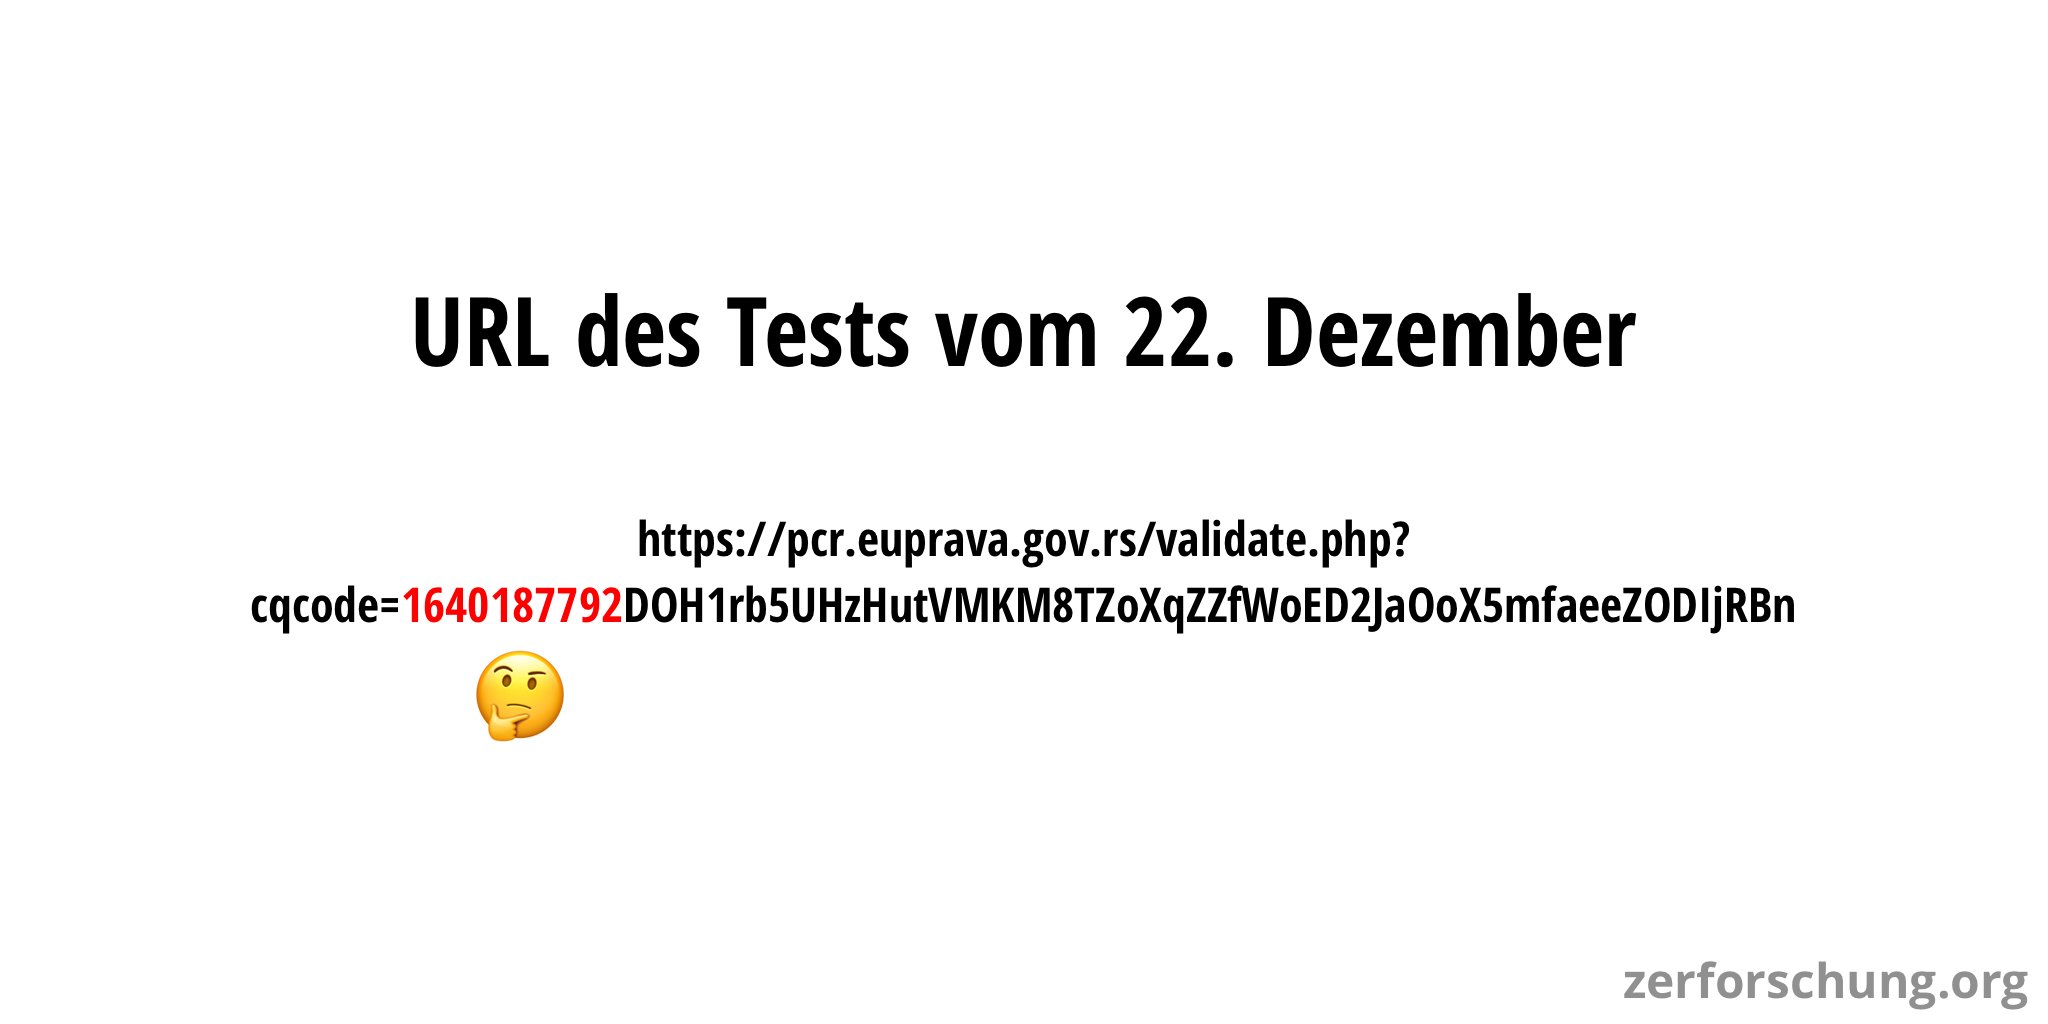 URL zur Verifikations-Website des Tests vom 22. Dezember, mit hervorgehobenem Abschnitt des Timestamps